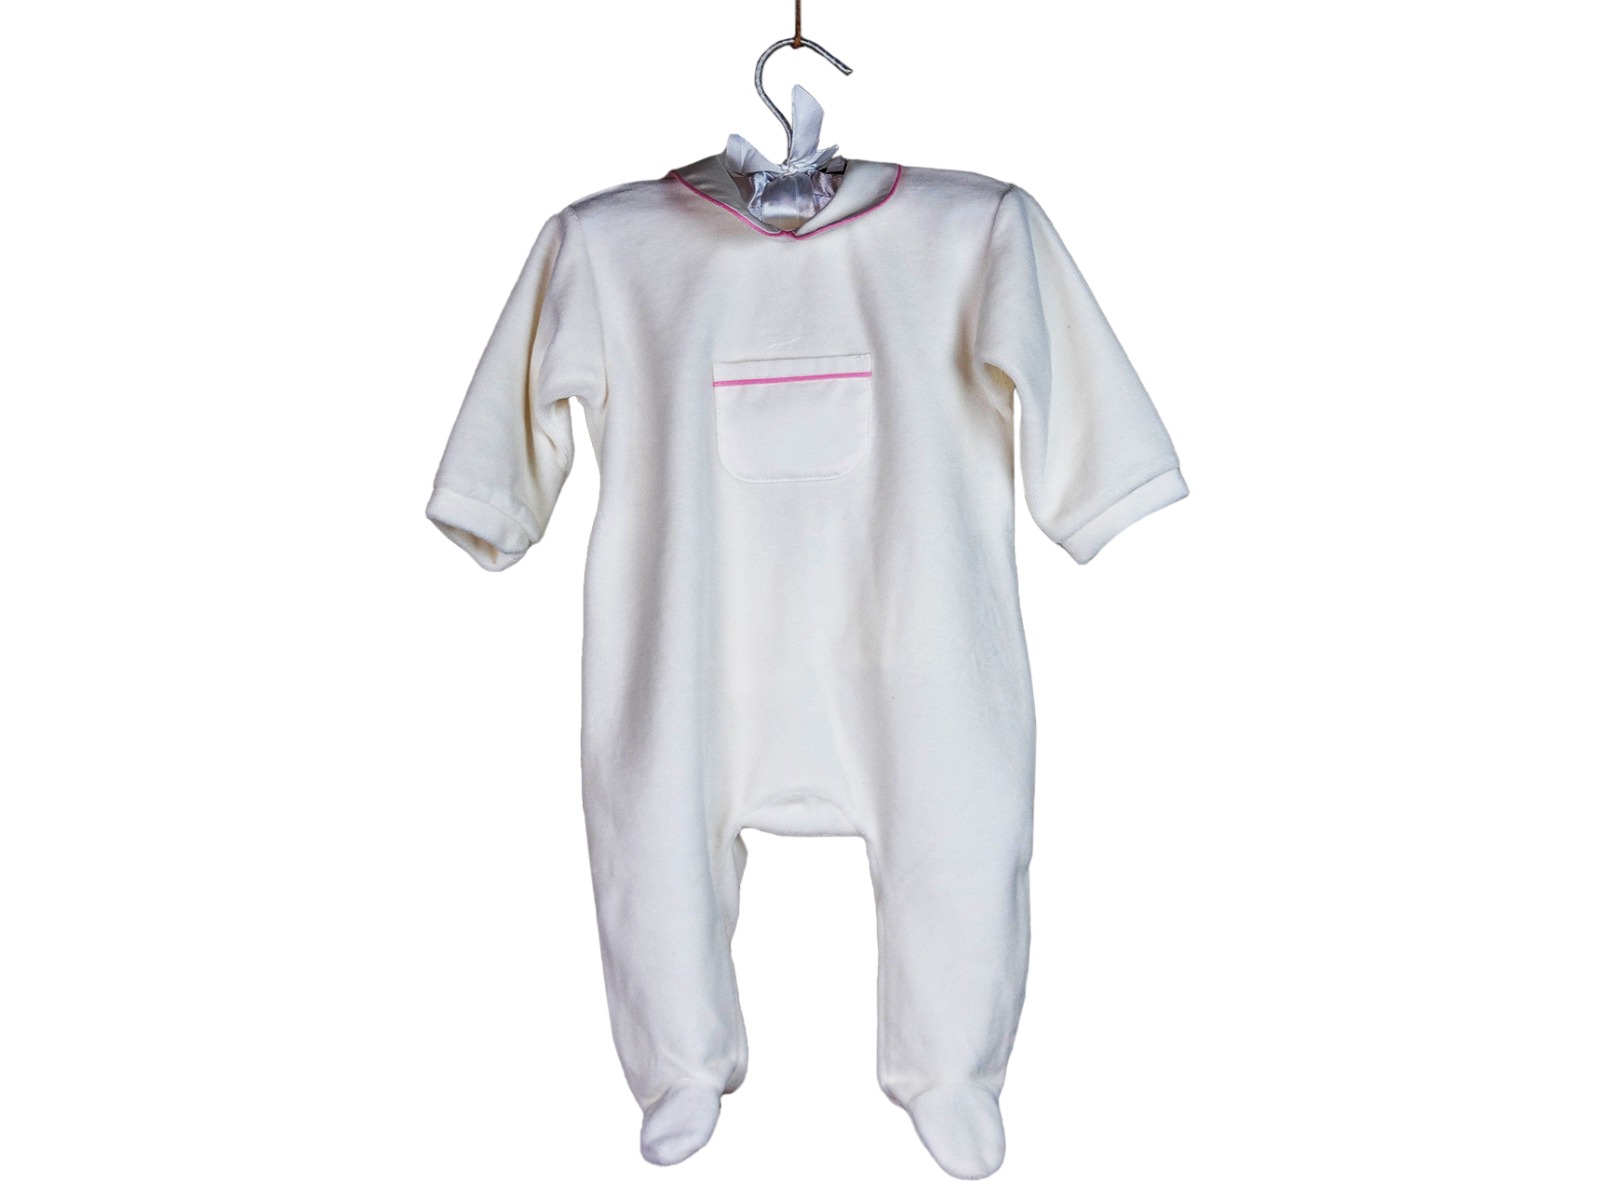 Siebaneck, i pigiami artigianali italiani: - neonata - mod.ROBI   bianca profilo rosa 